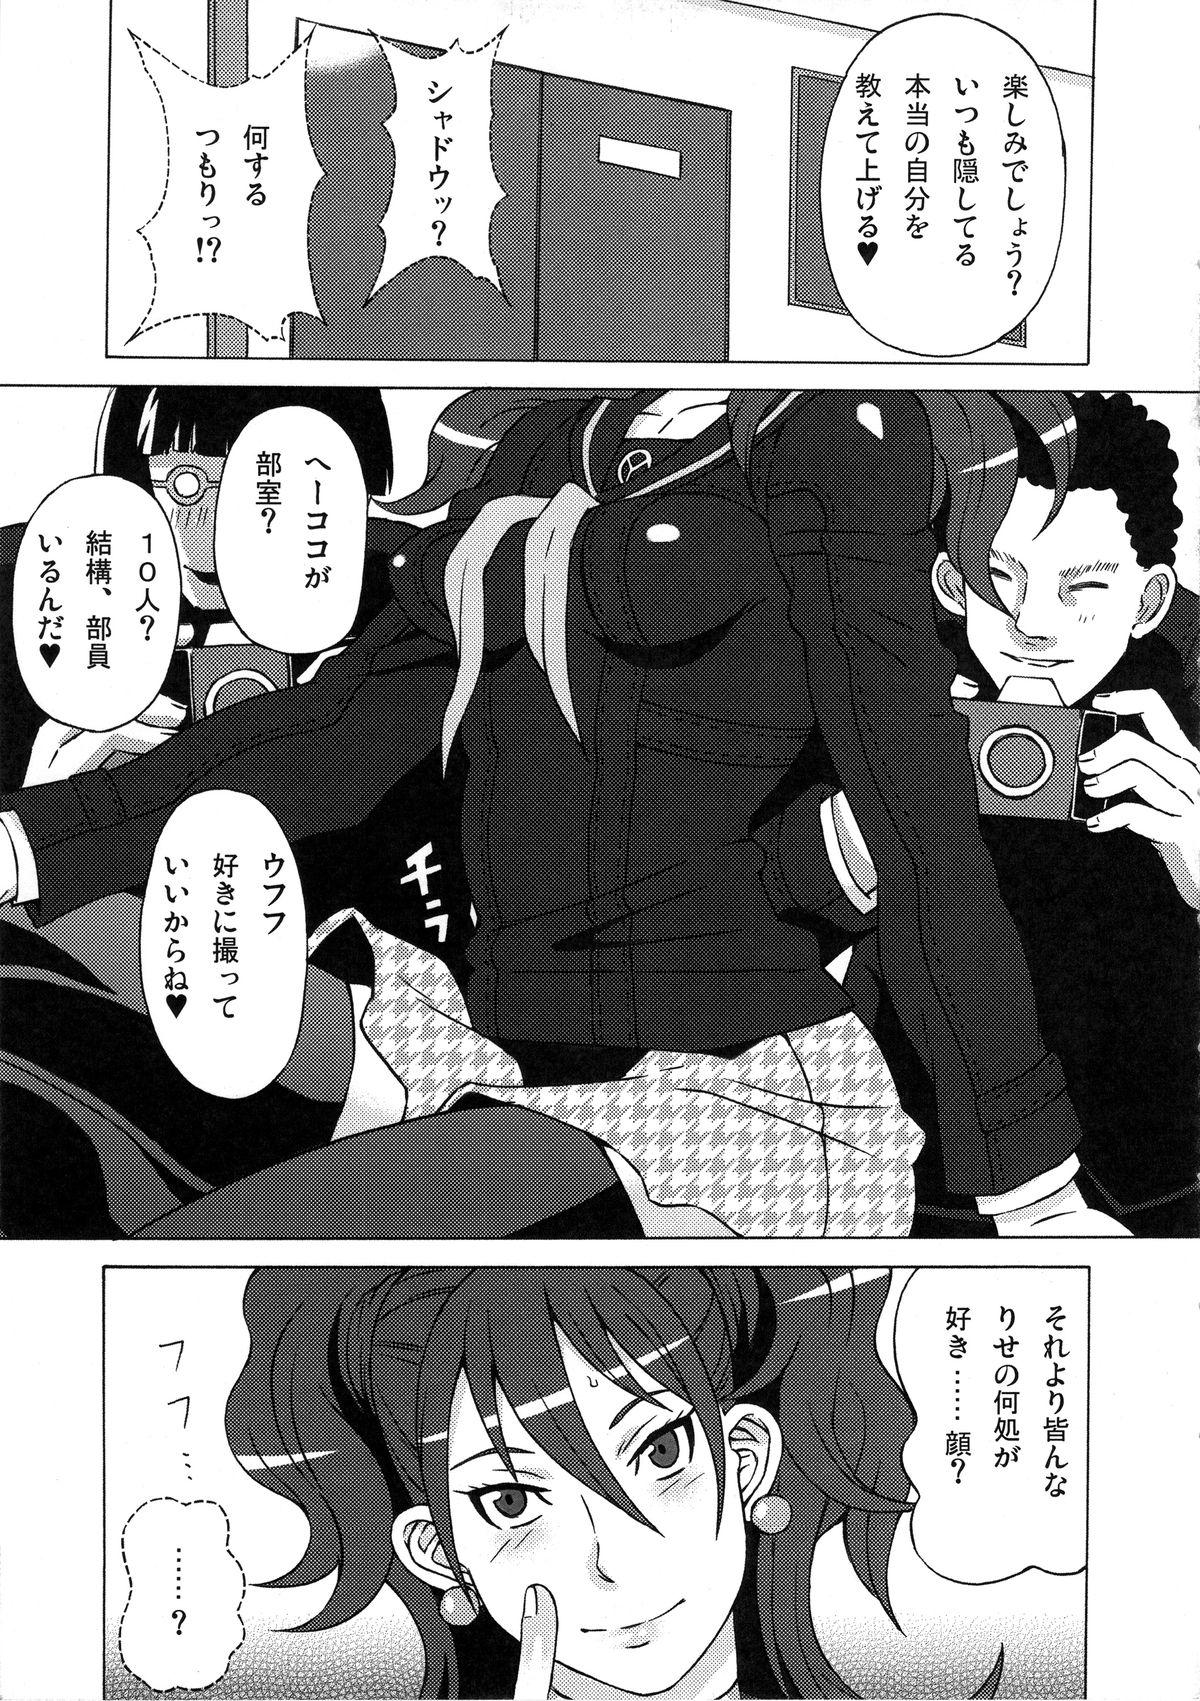 Spanking Kujikawa Rise ni Hazukashii Koto o Sasete mita. - Persona 4 Double - Page 6